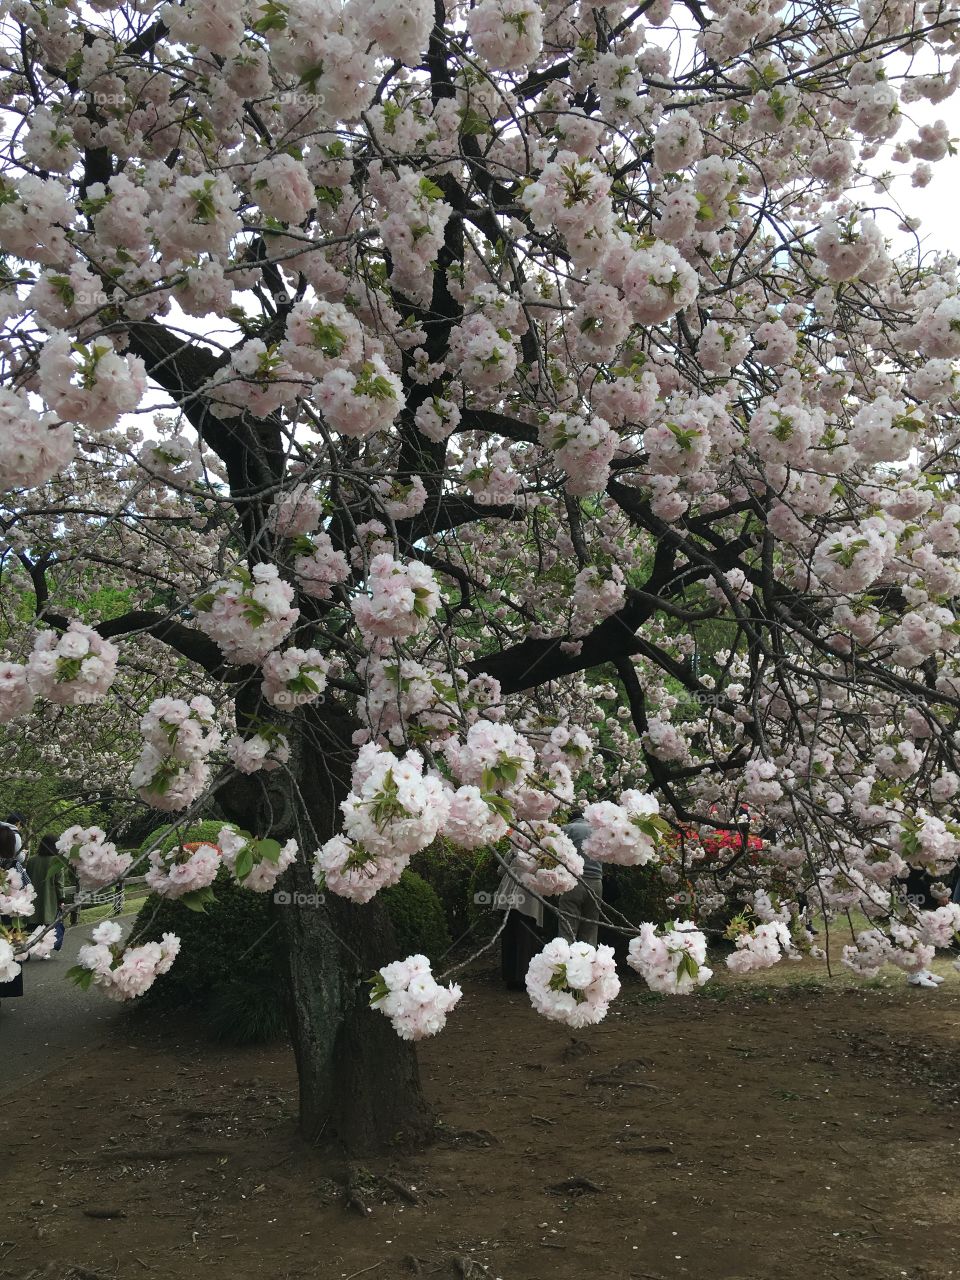 Cherryblossom♡Sakura are in full bloom